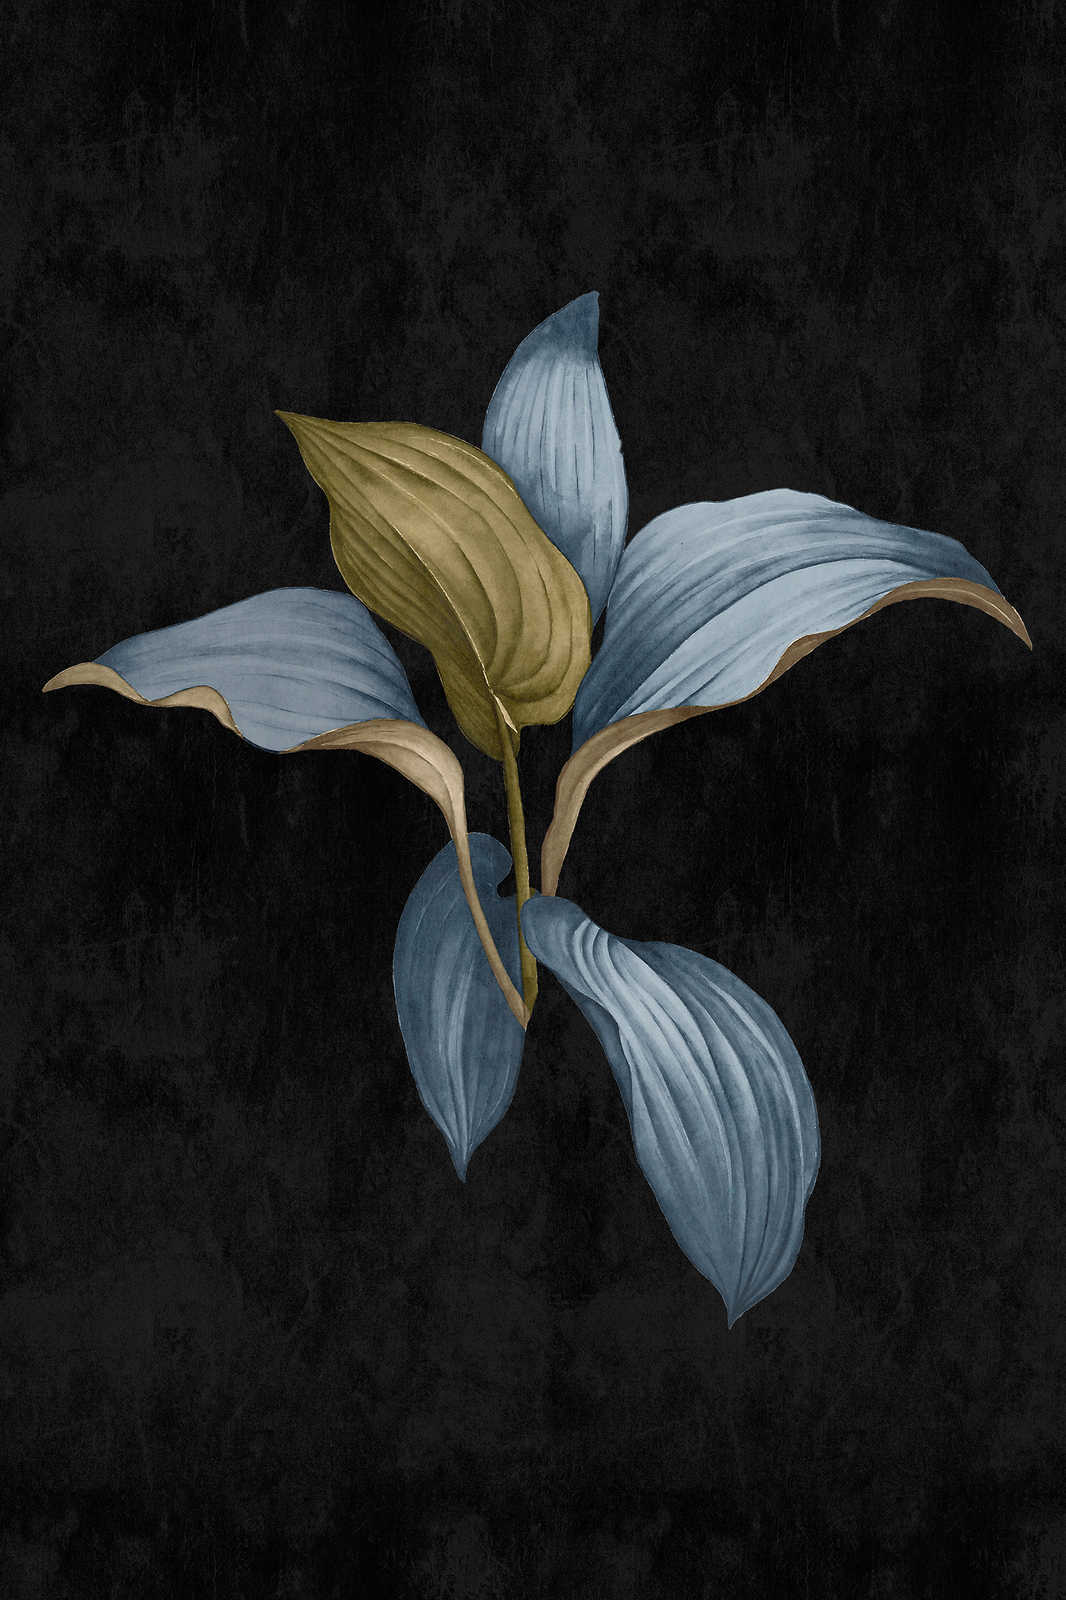             Fiji 3 - Dark Canvas Painting Botanical Design in Blue & Green - 0.80 m x 1.20 m
        